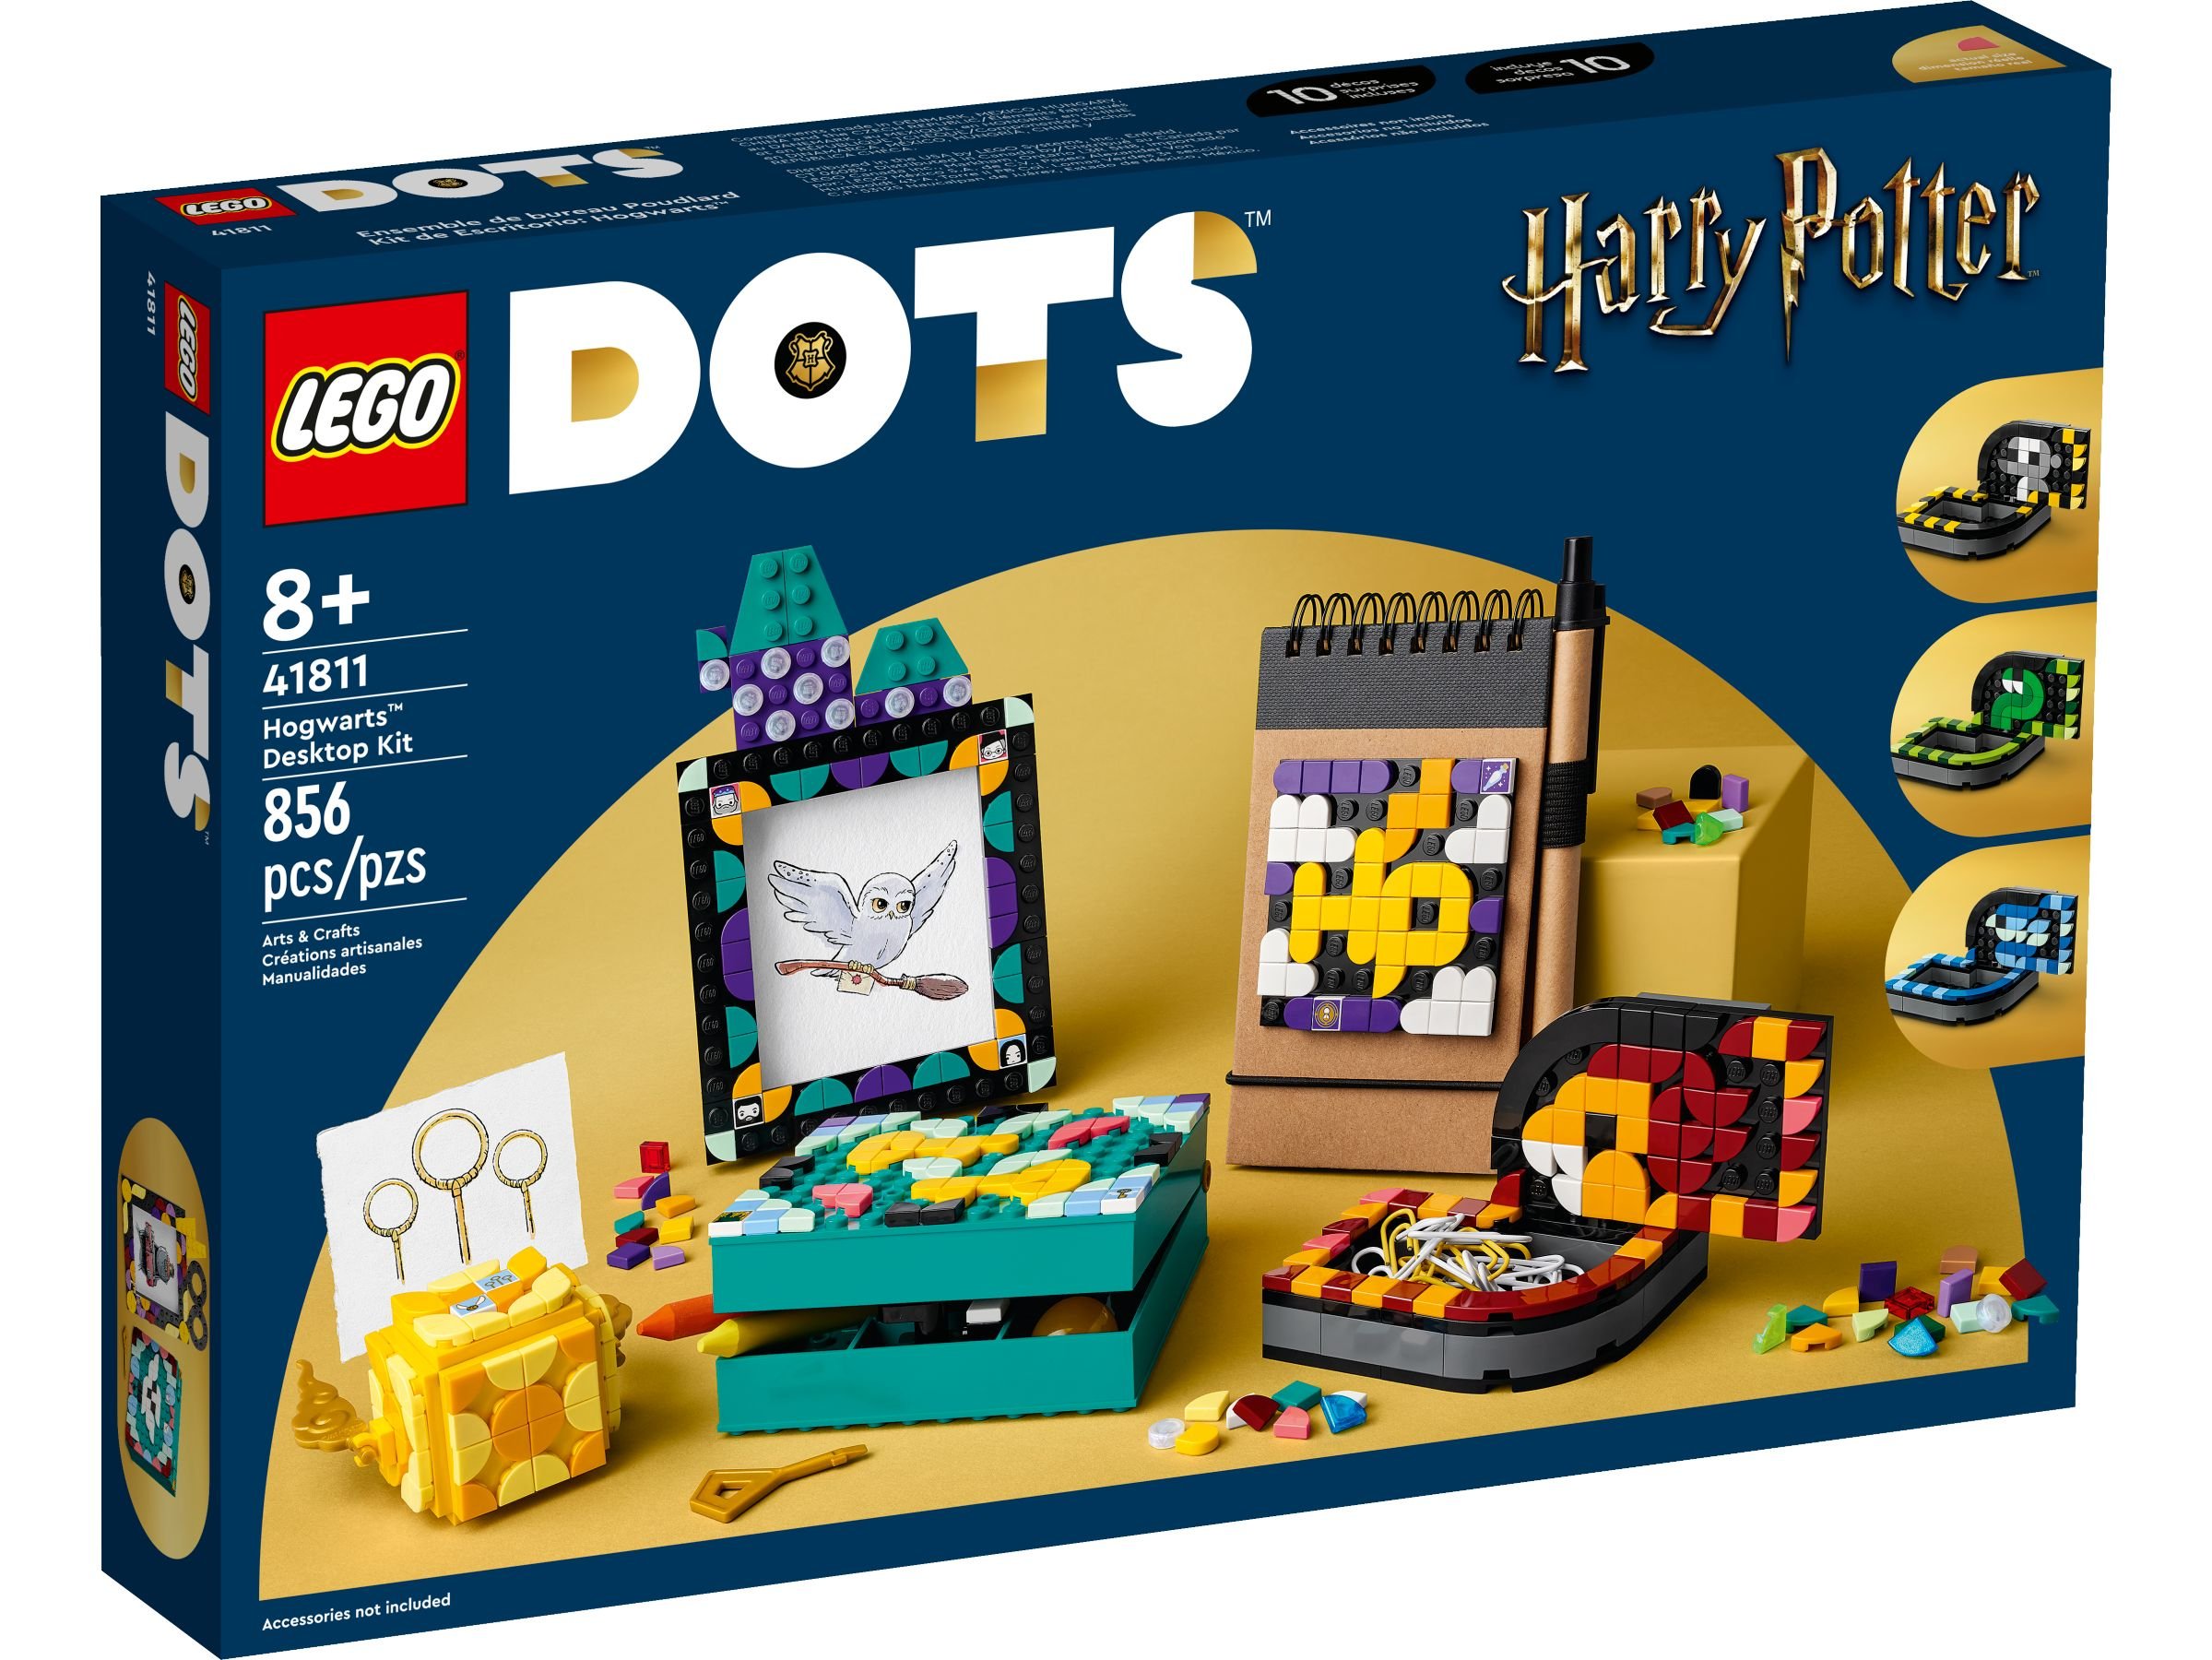 LEGO Dots 41811 Hogwarts™ Schreibtisch-Set LEGO_41811_alt1.jpg